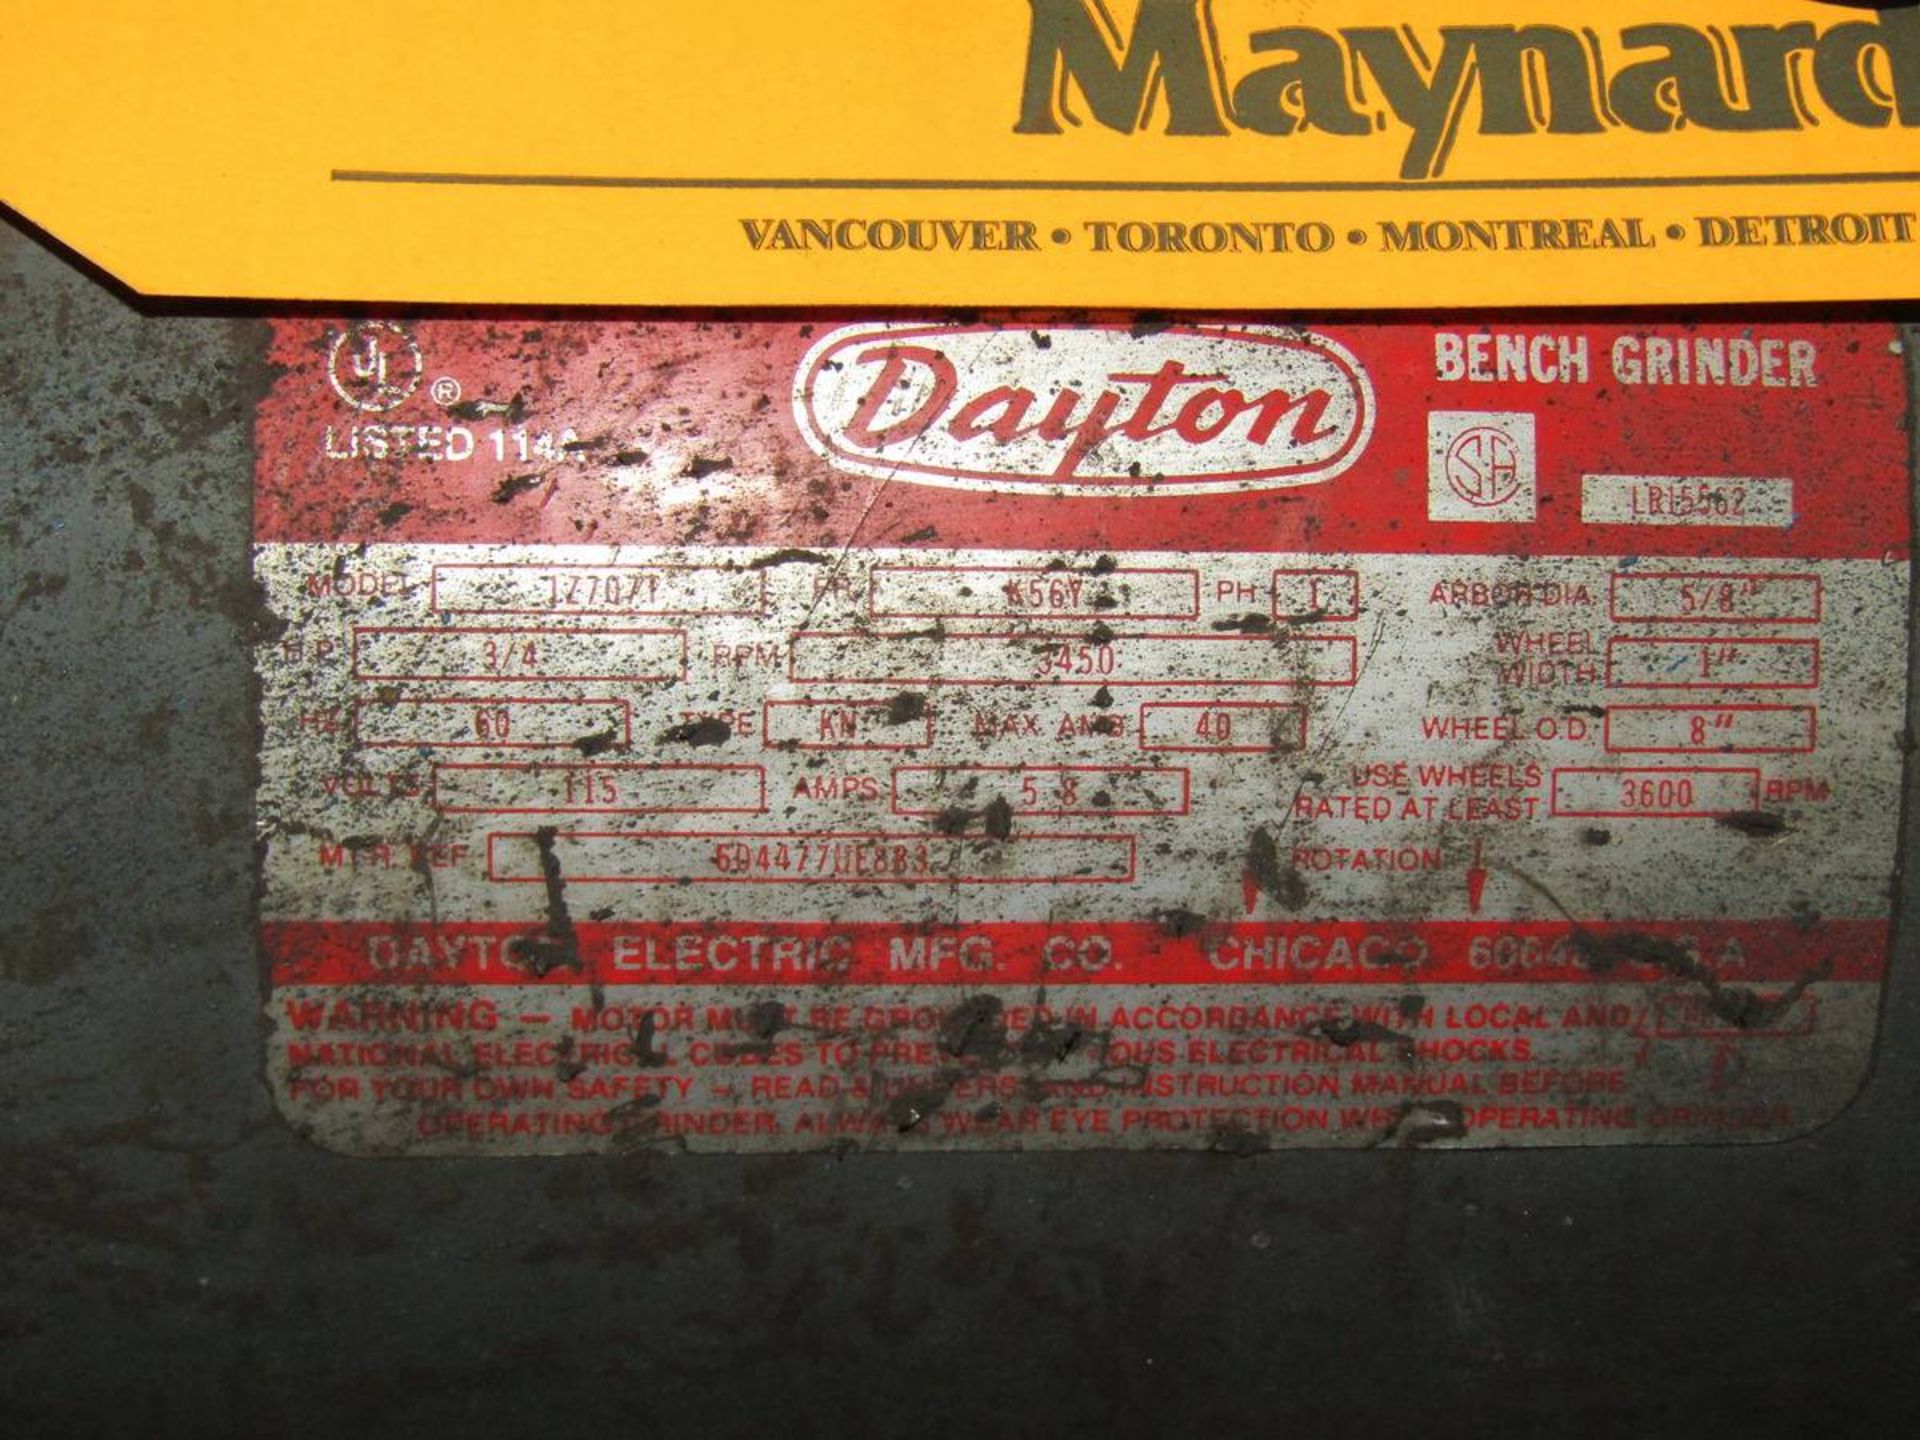 Dayton 1Z707F 8" Double-End Bench Grinder - Image 2 of 2